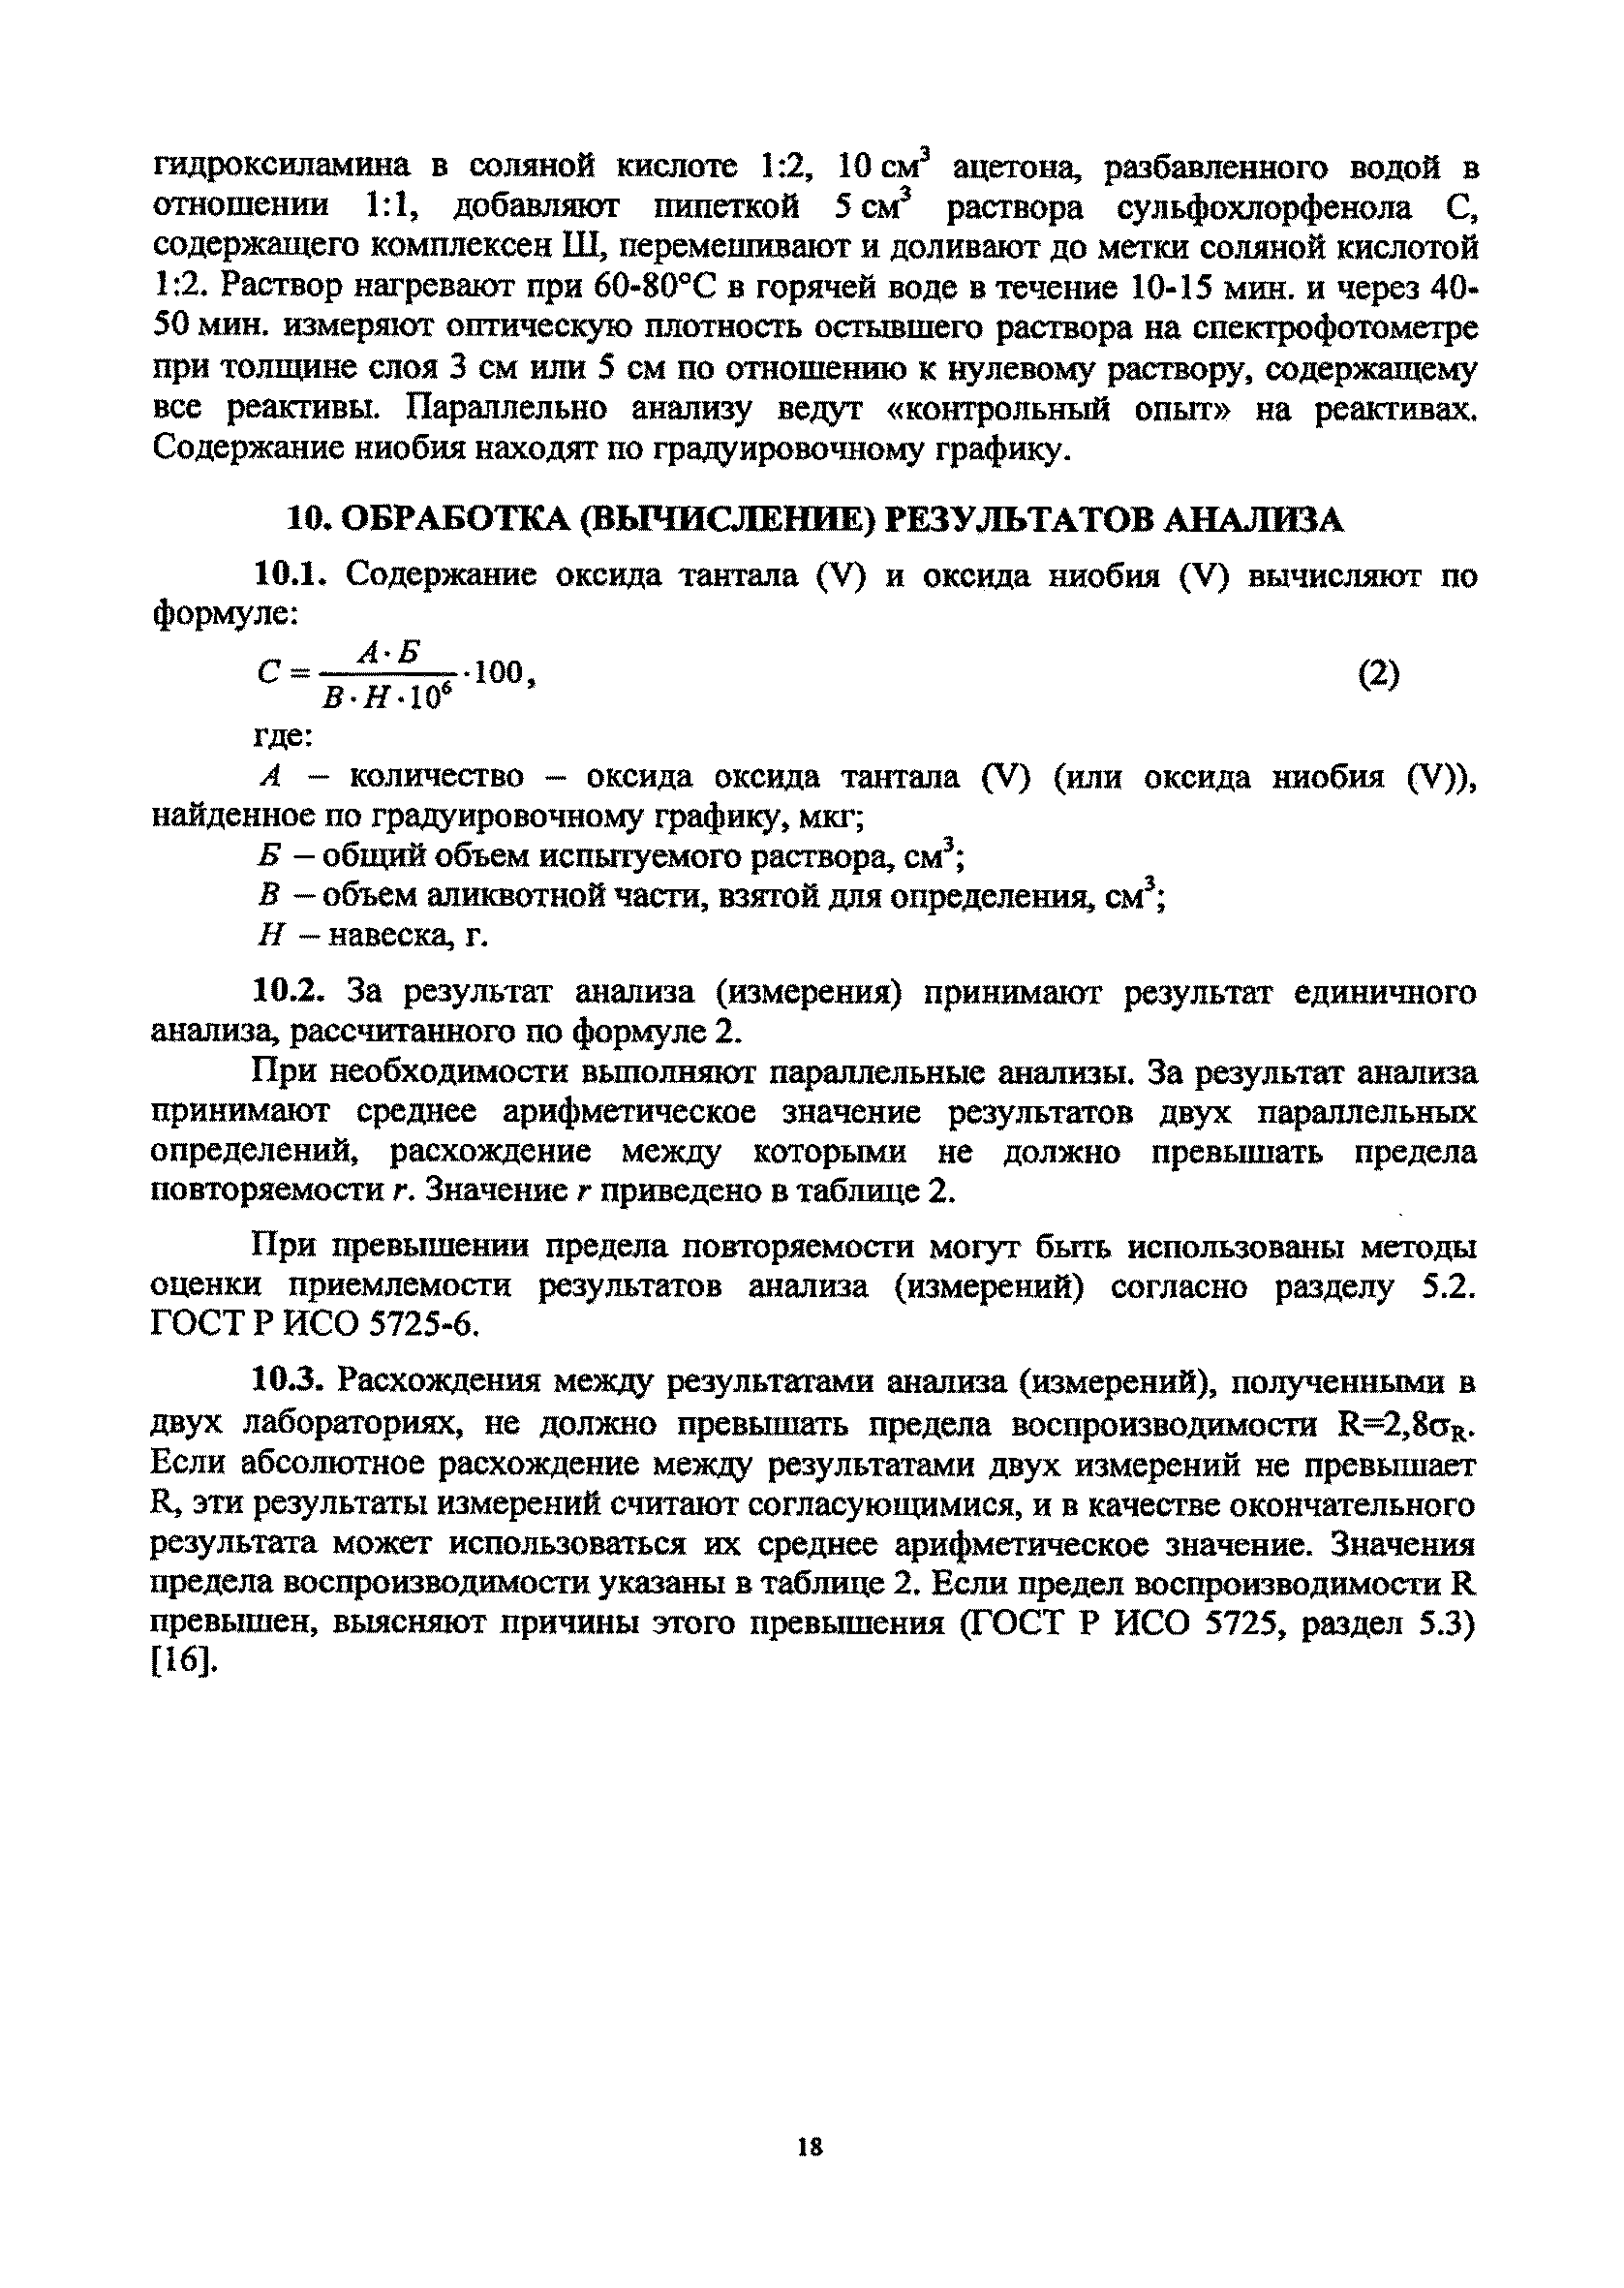 Методика НСАМ 103-Х-1